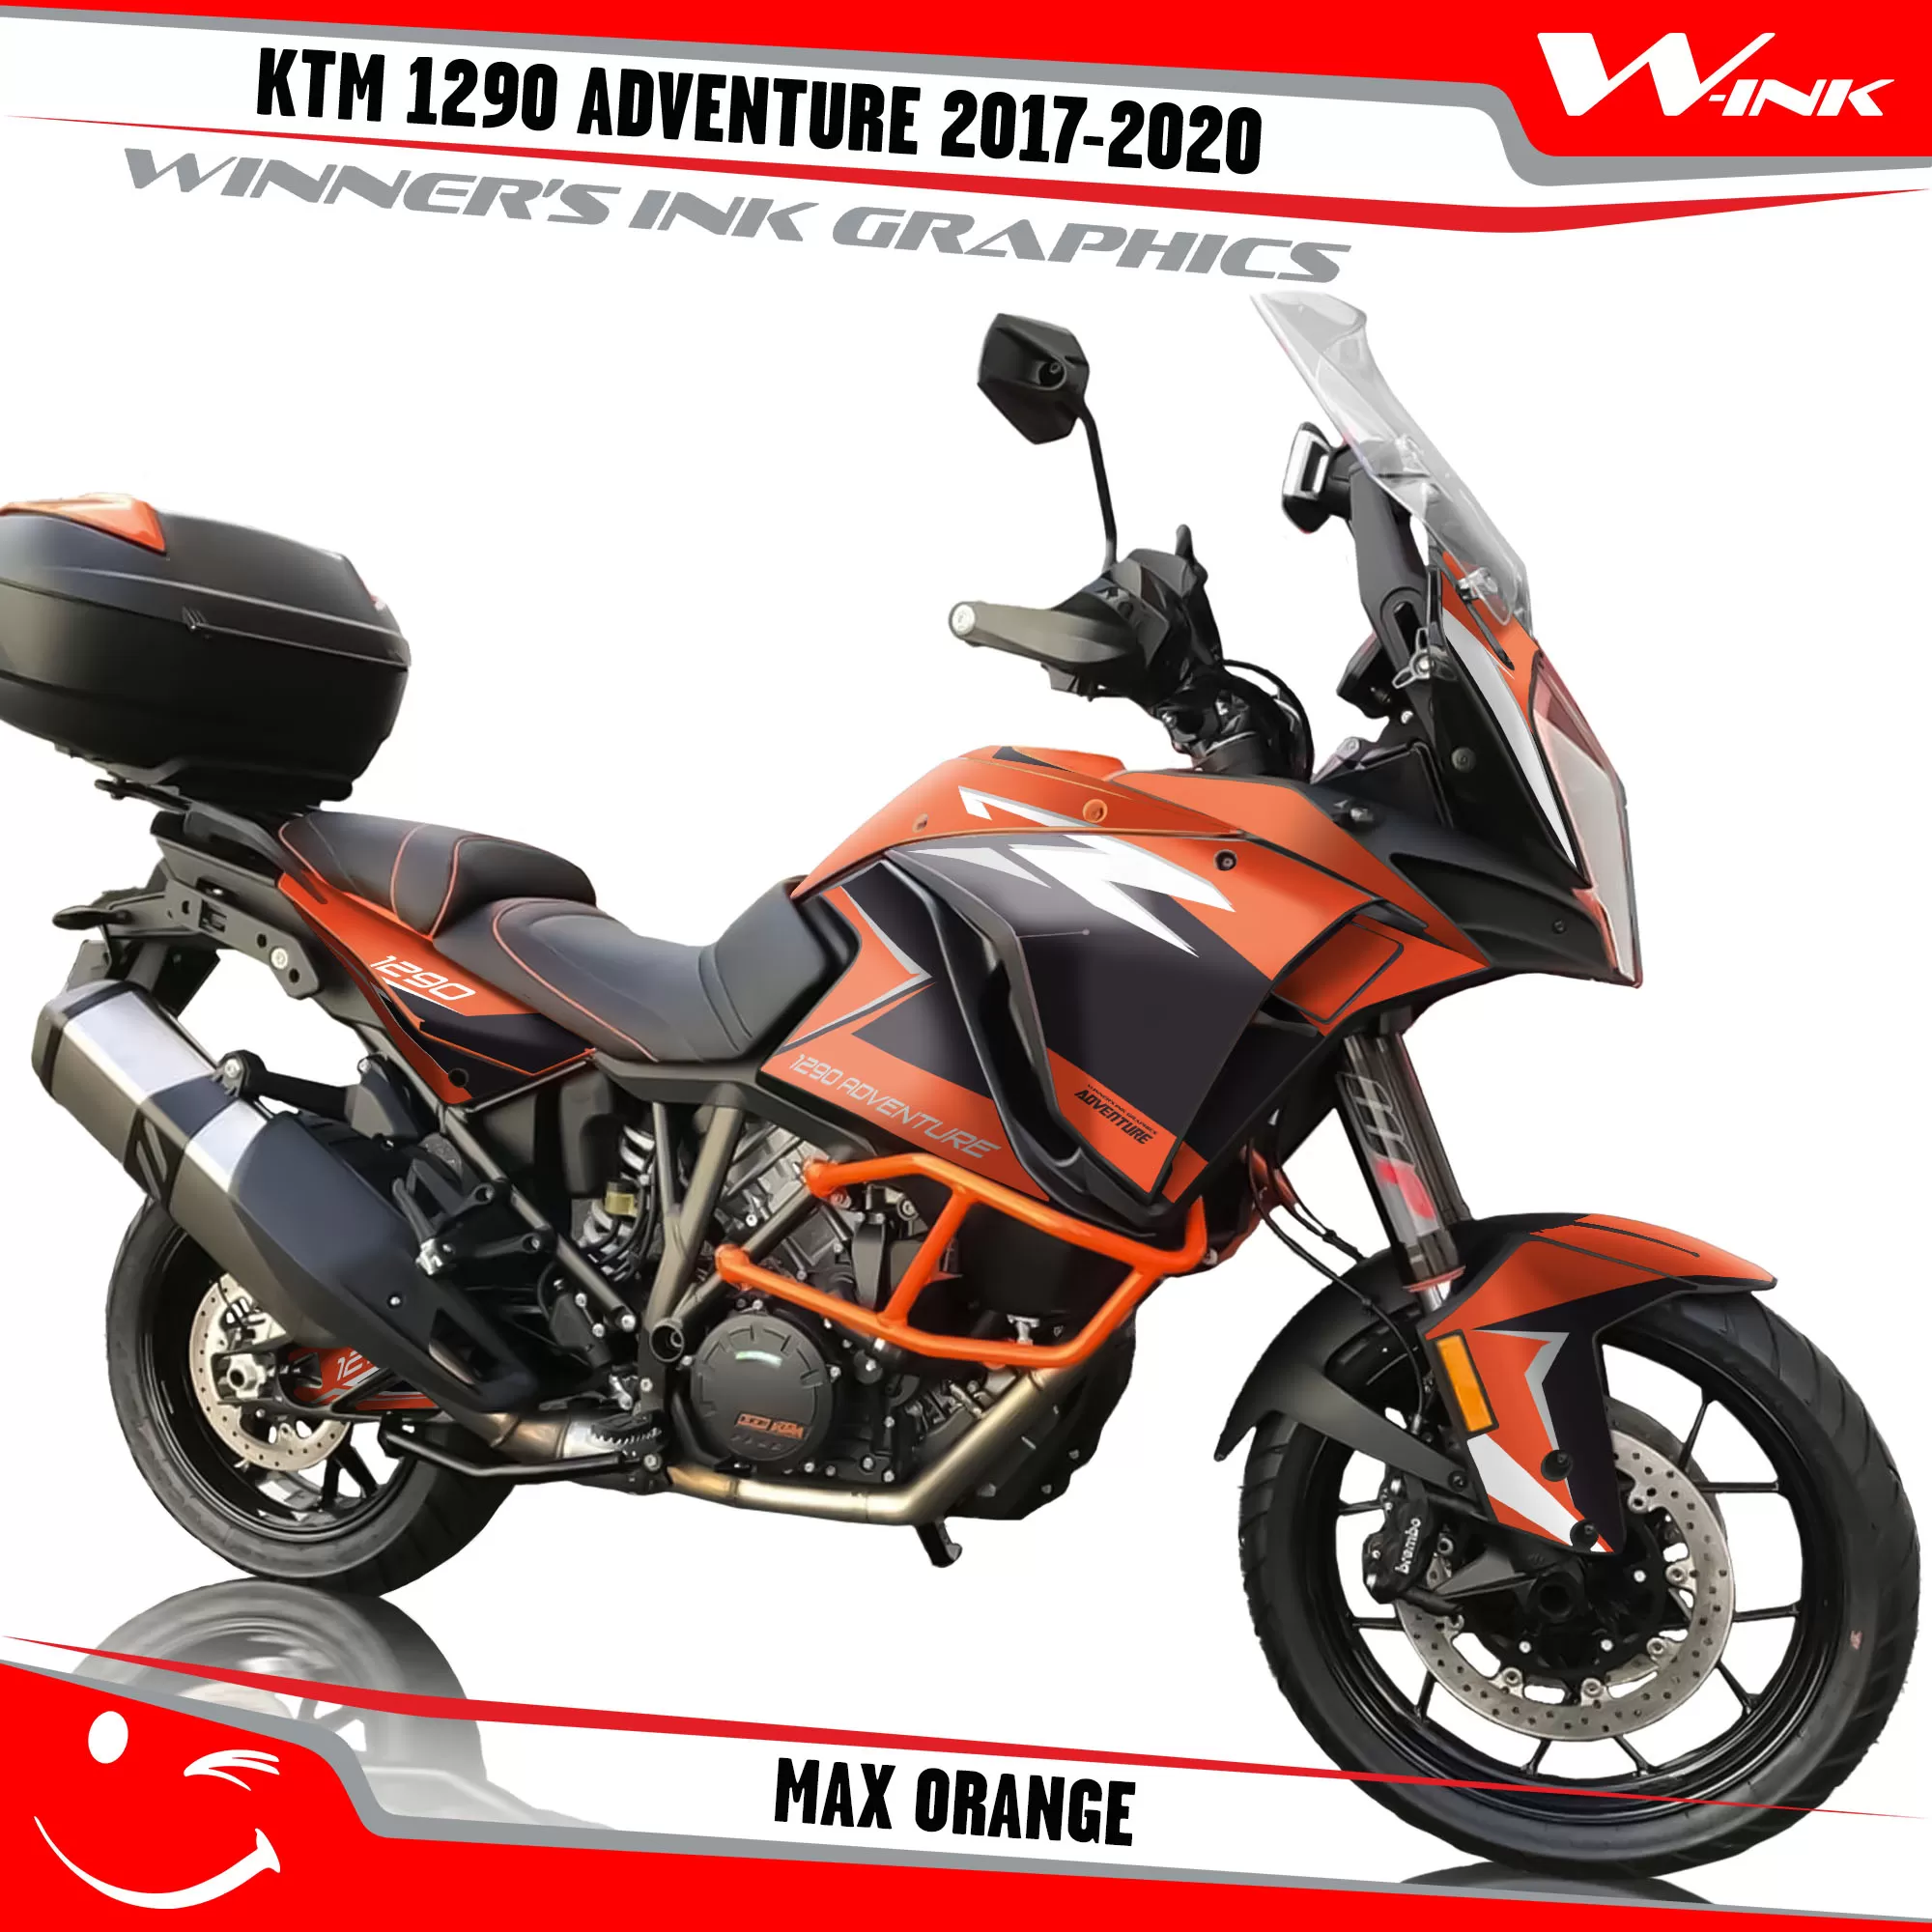 KTM-Adventure-1290-2017-2018-2019-2020-graphics-kit-and-decals-Max-Orange